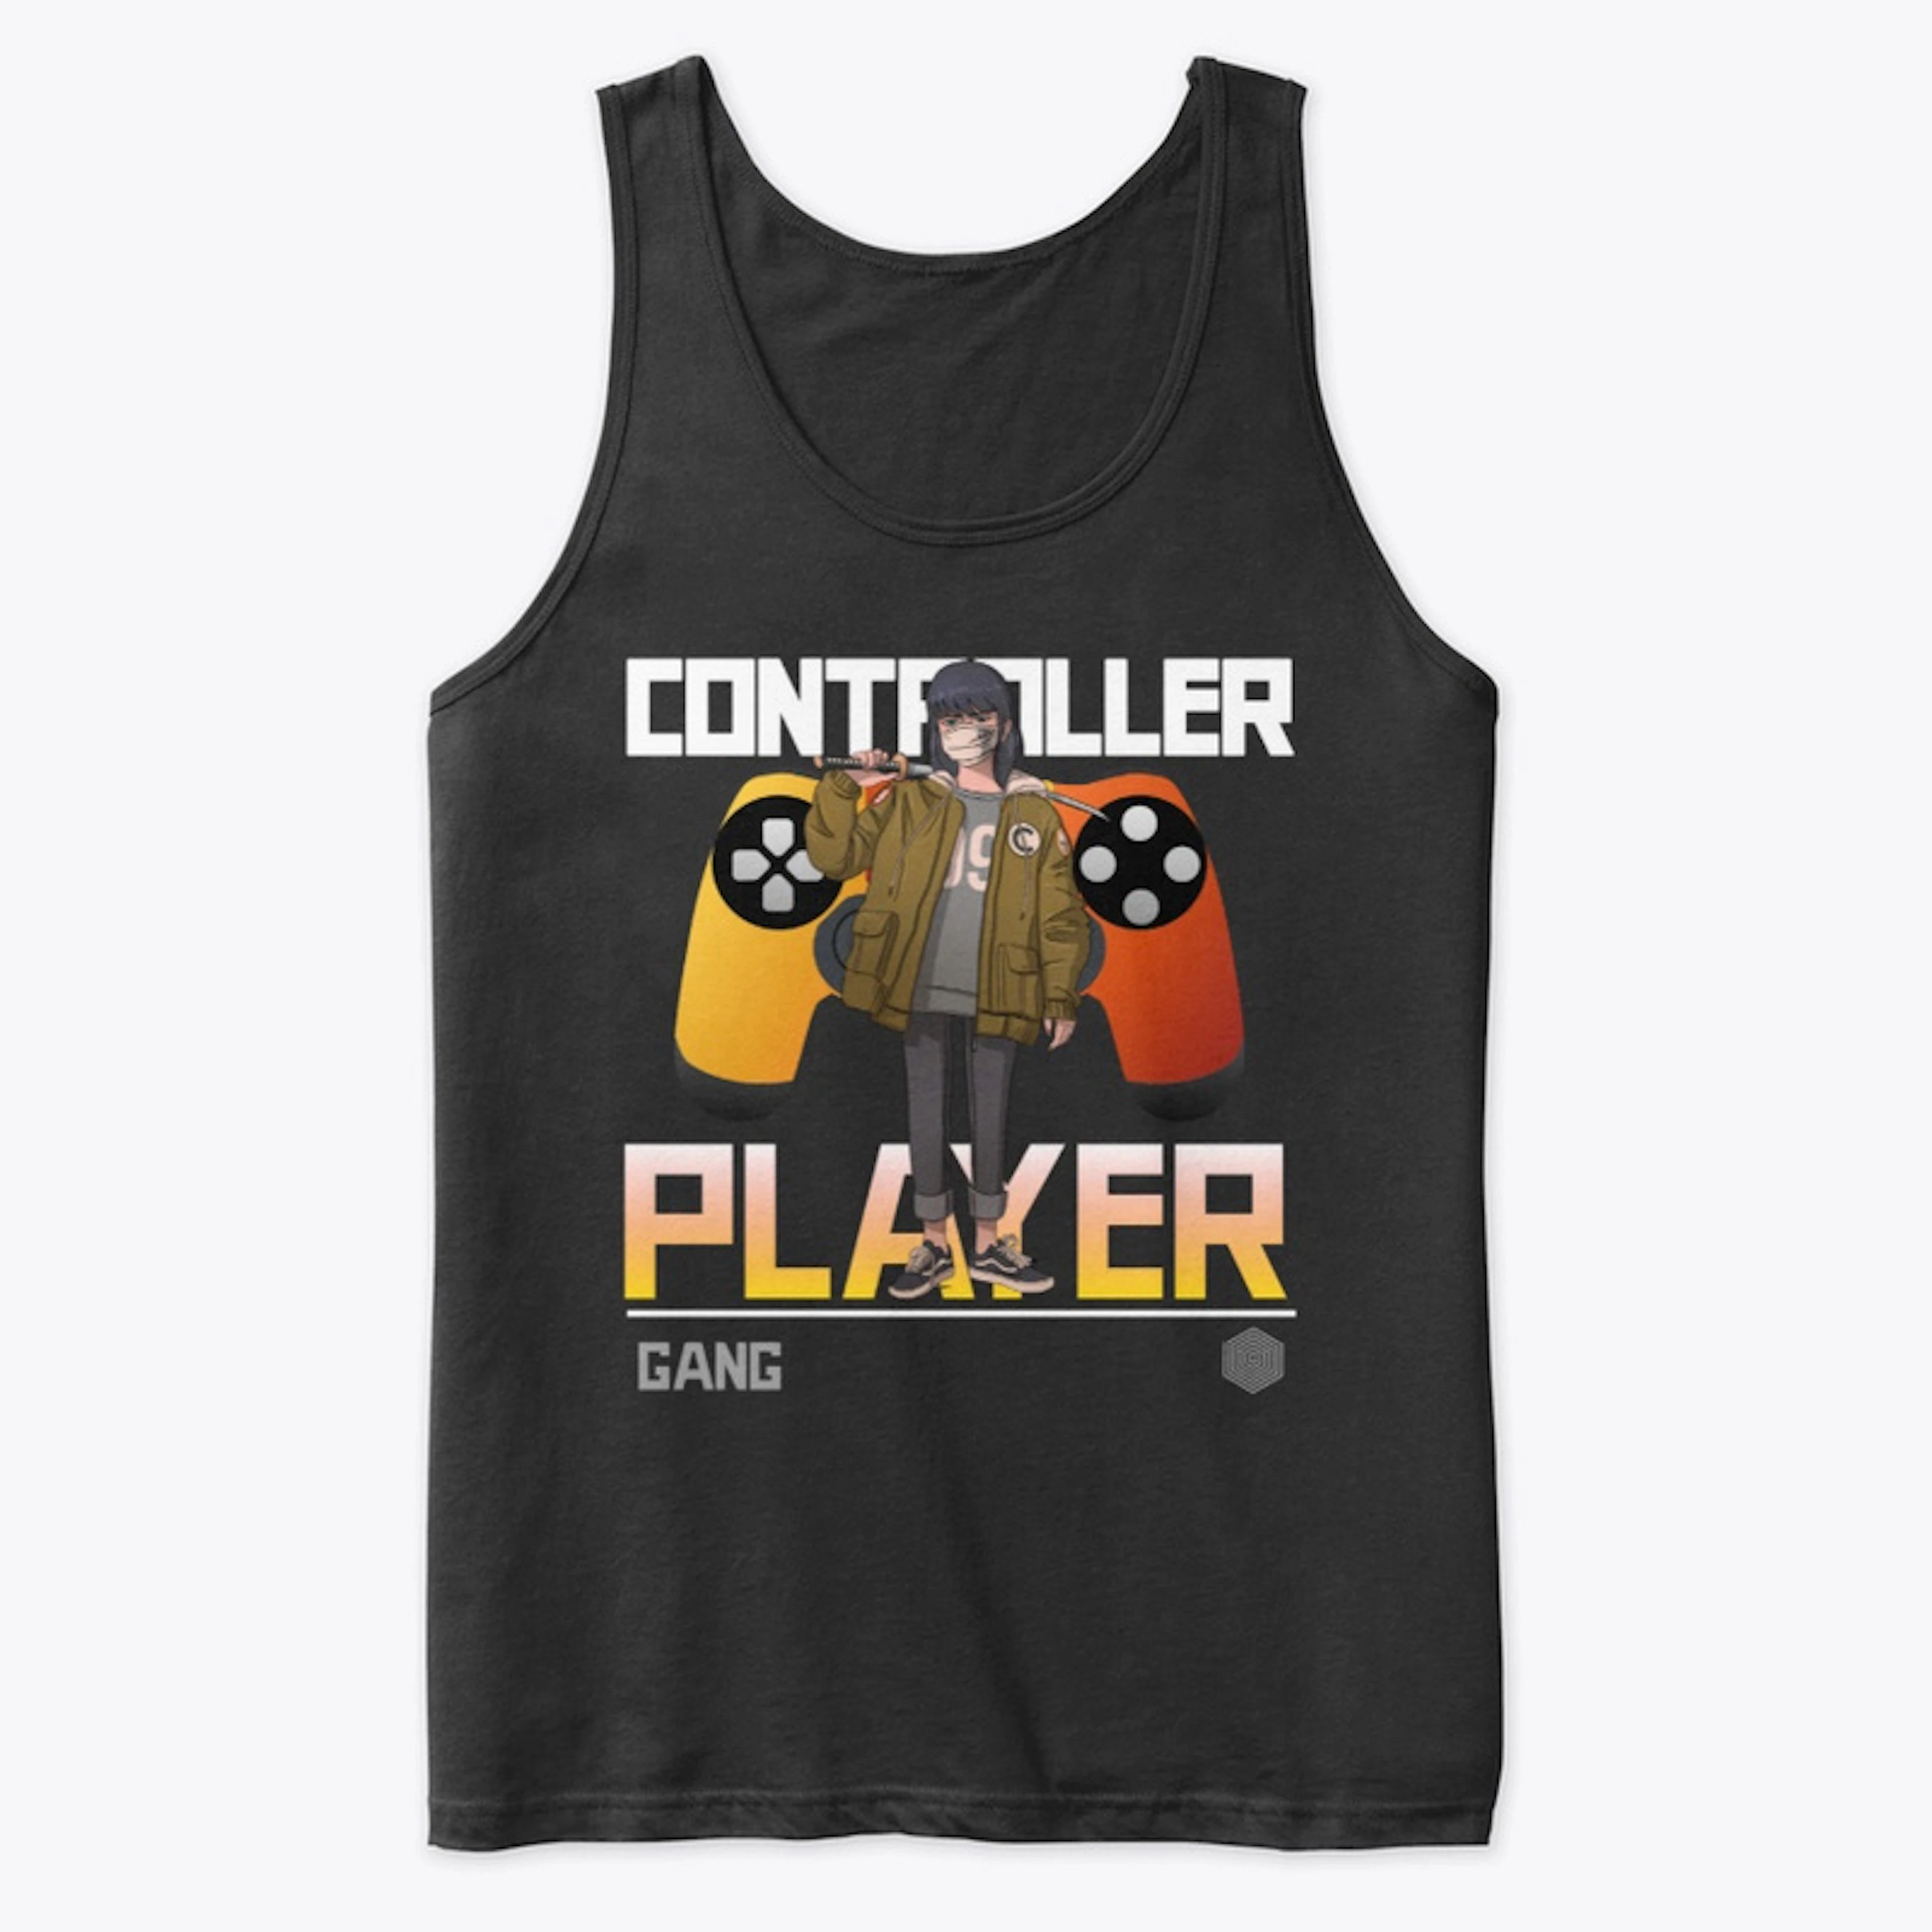 Controller Player Gang